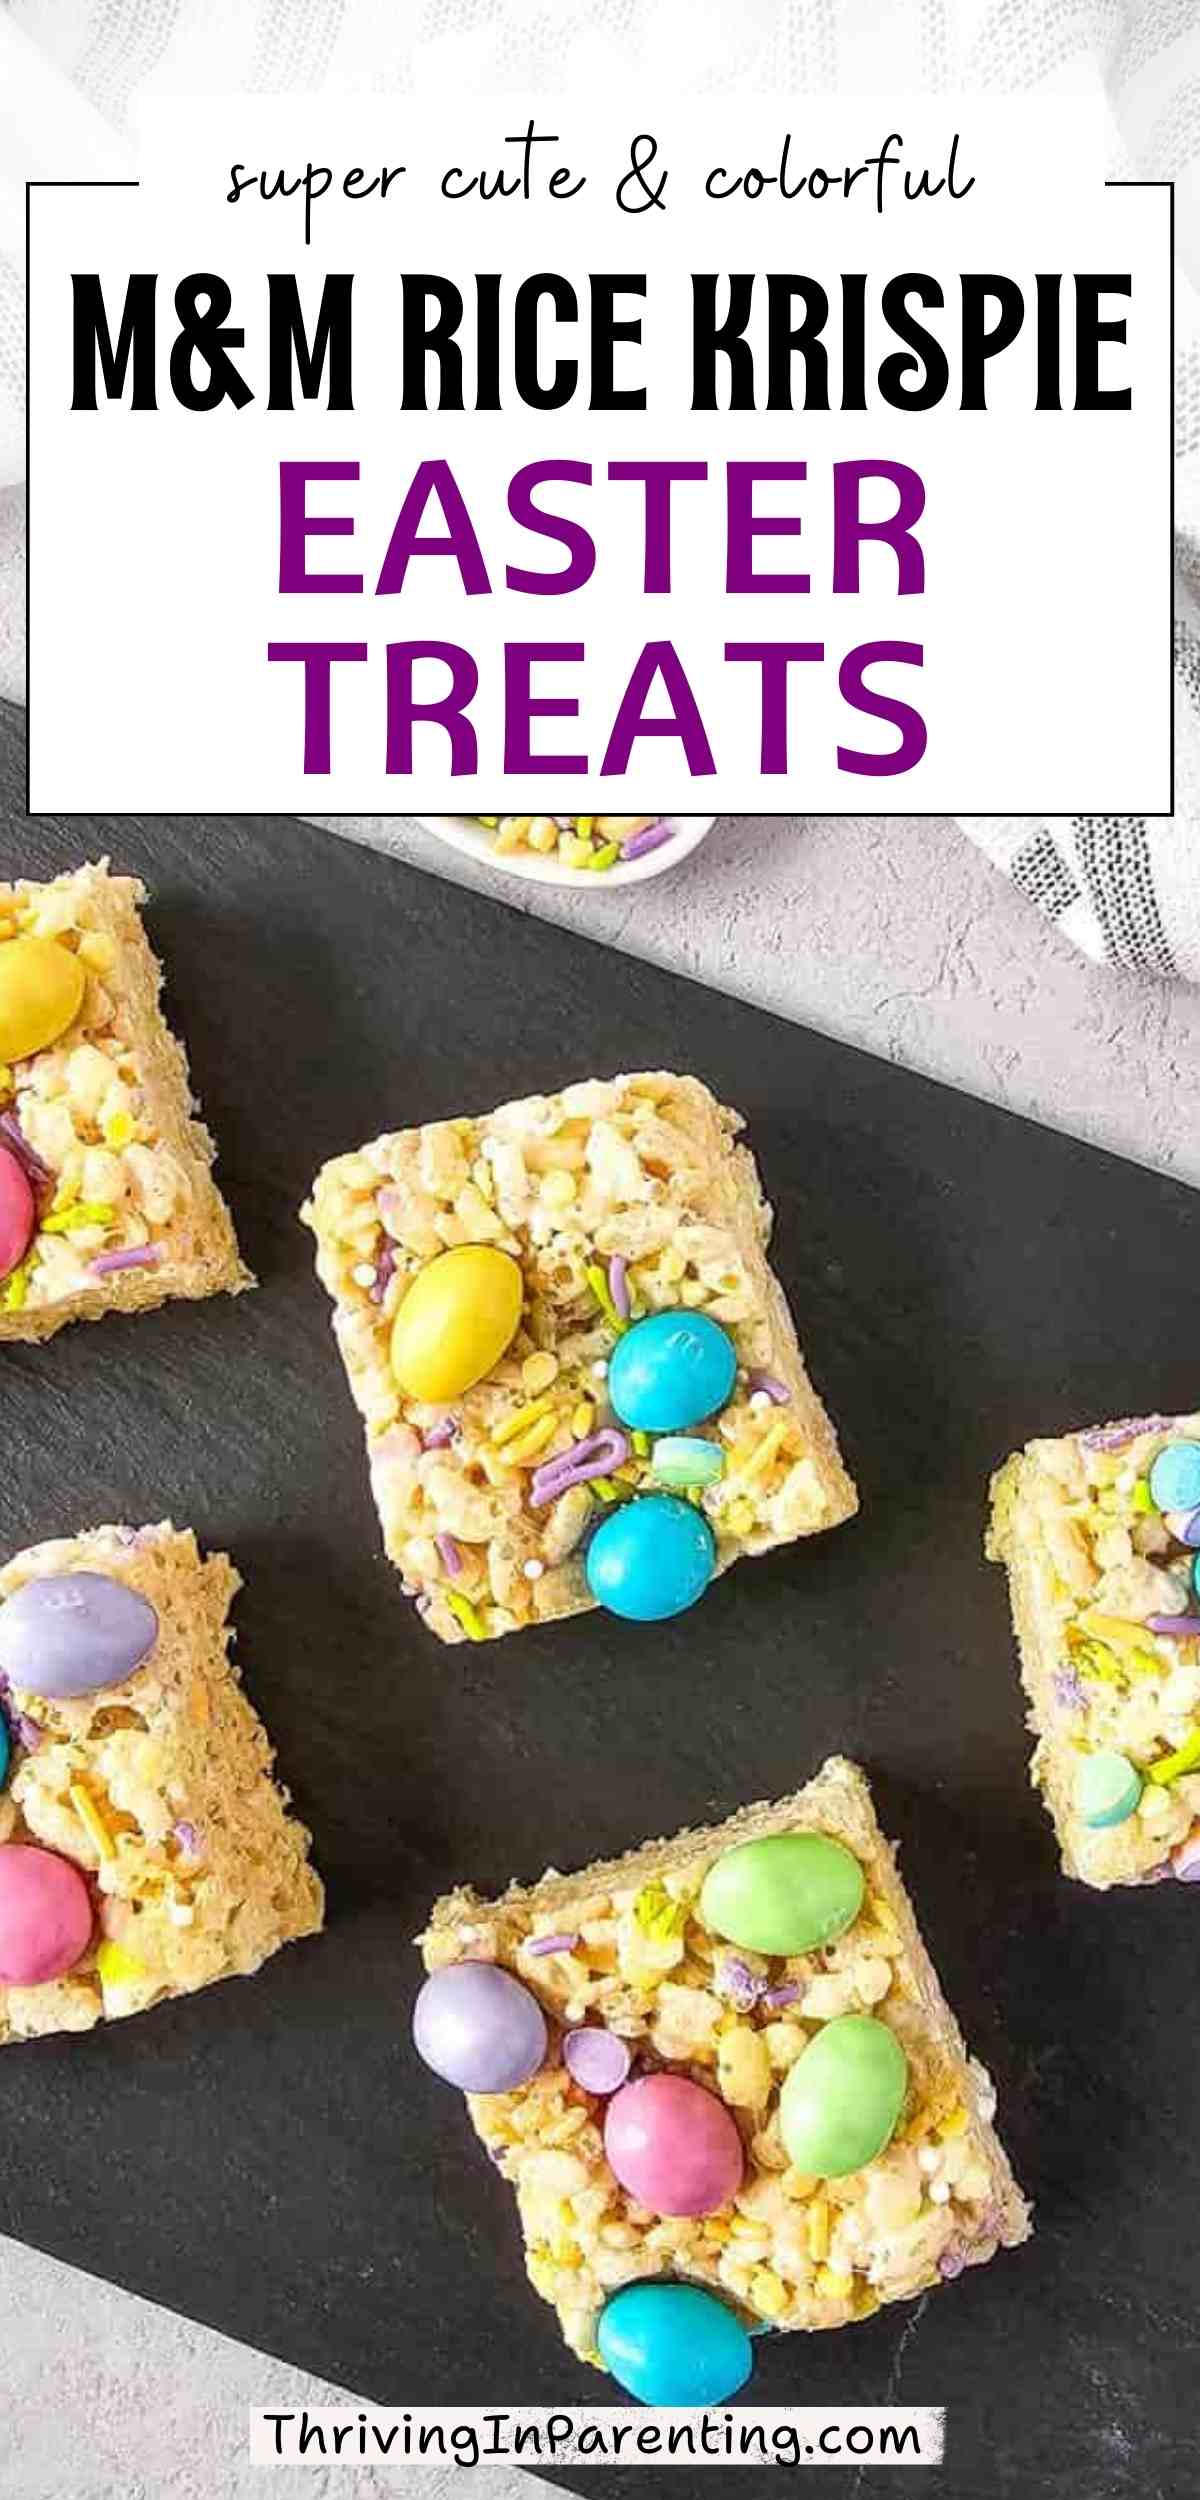 Pin image of M&M rice krispie Easter treats.